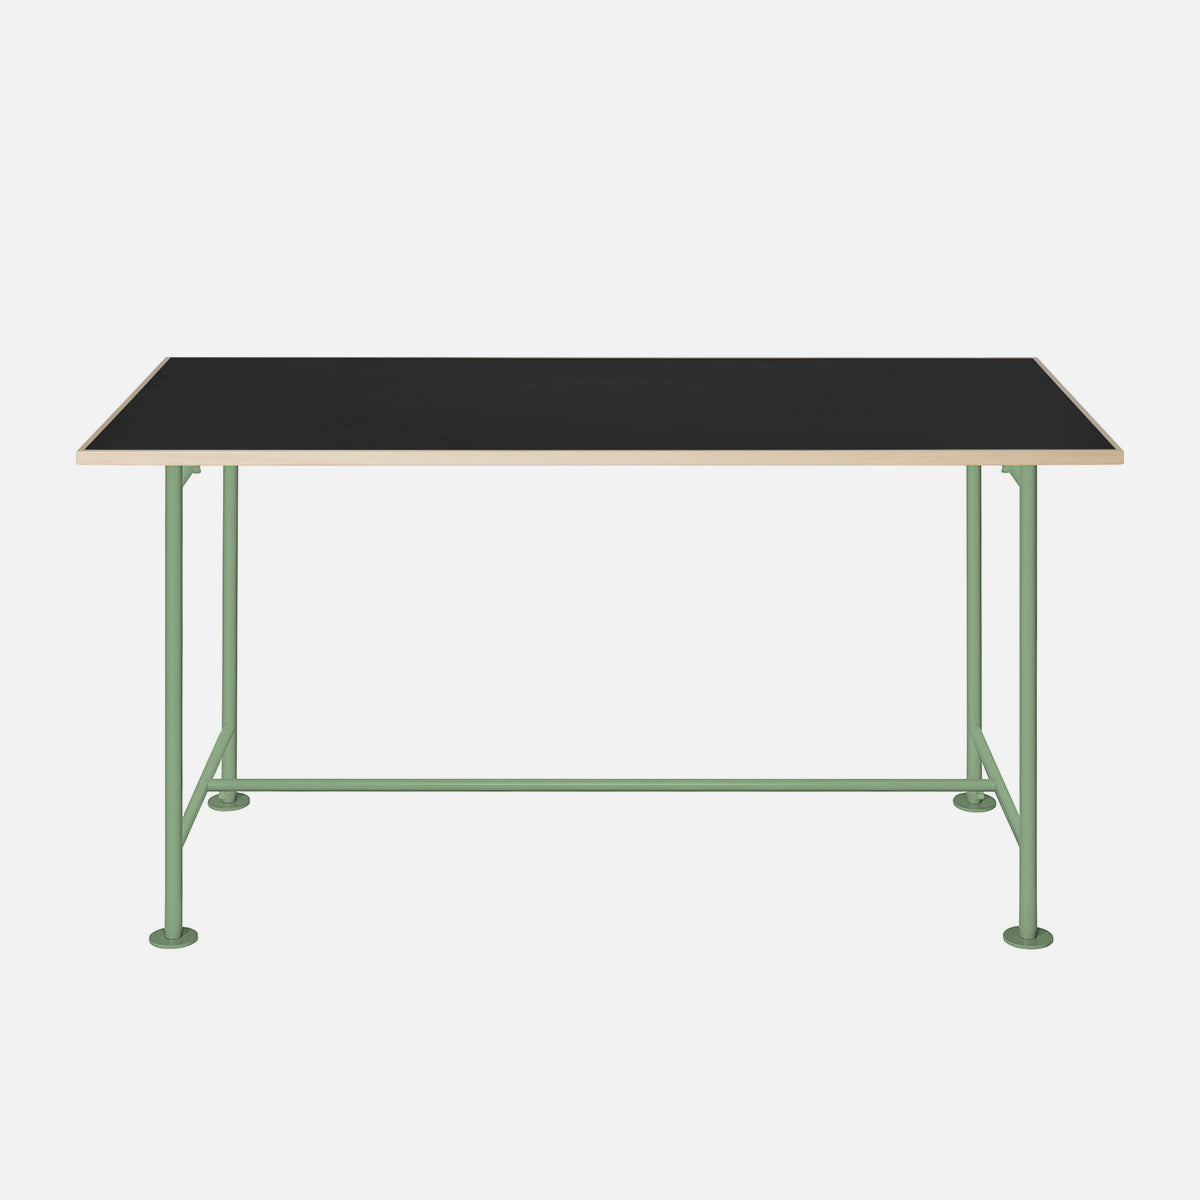 KIT Table TBL-01 BKIG　WORK TABLE  ミーティングテーブル  ワークテーブル